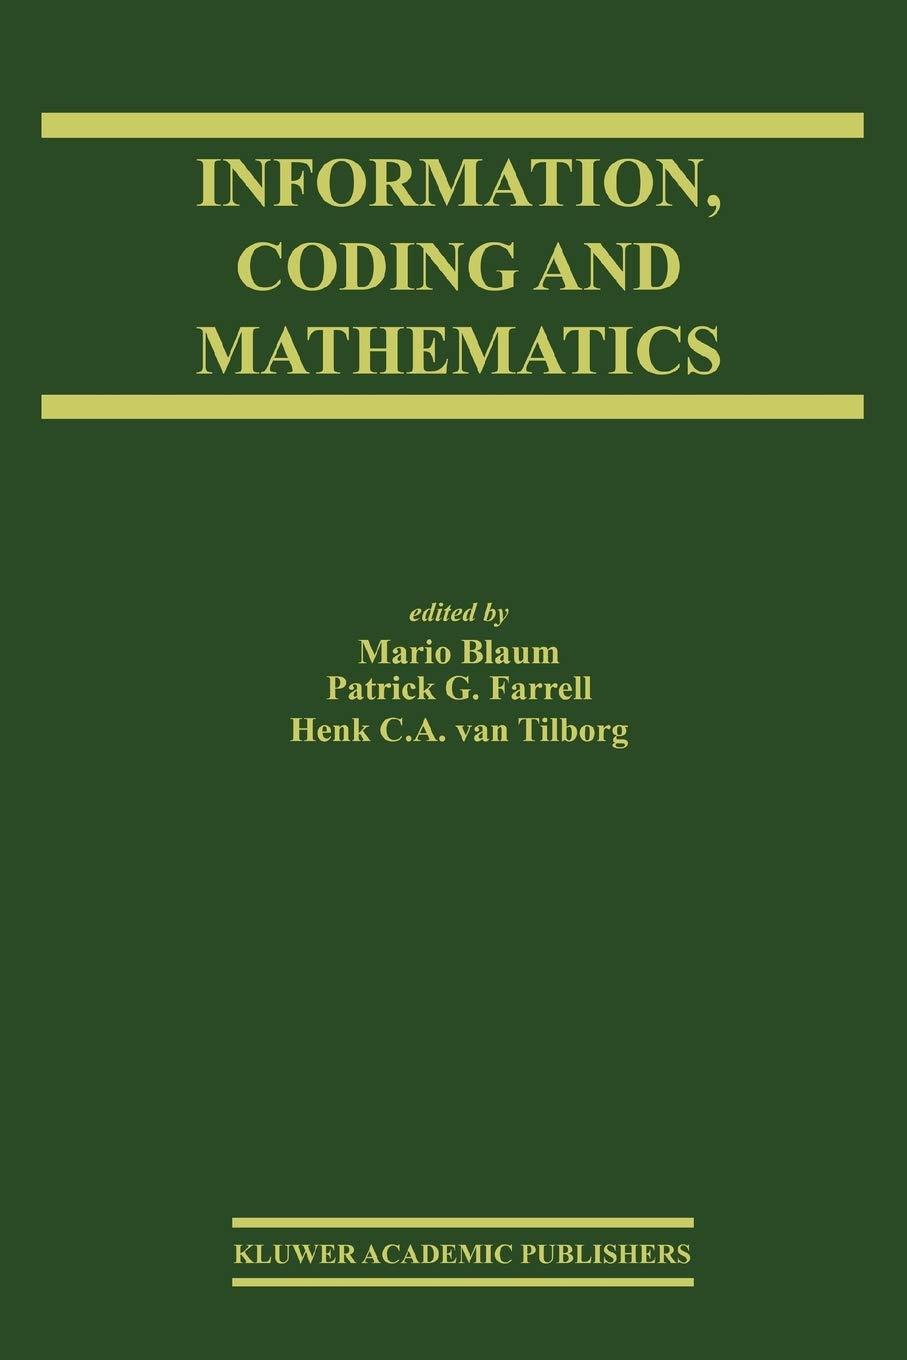 information coding and mathematics 2002 edition mario blaum, patrick g. farrell, henk c.a. van tilborg